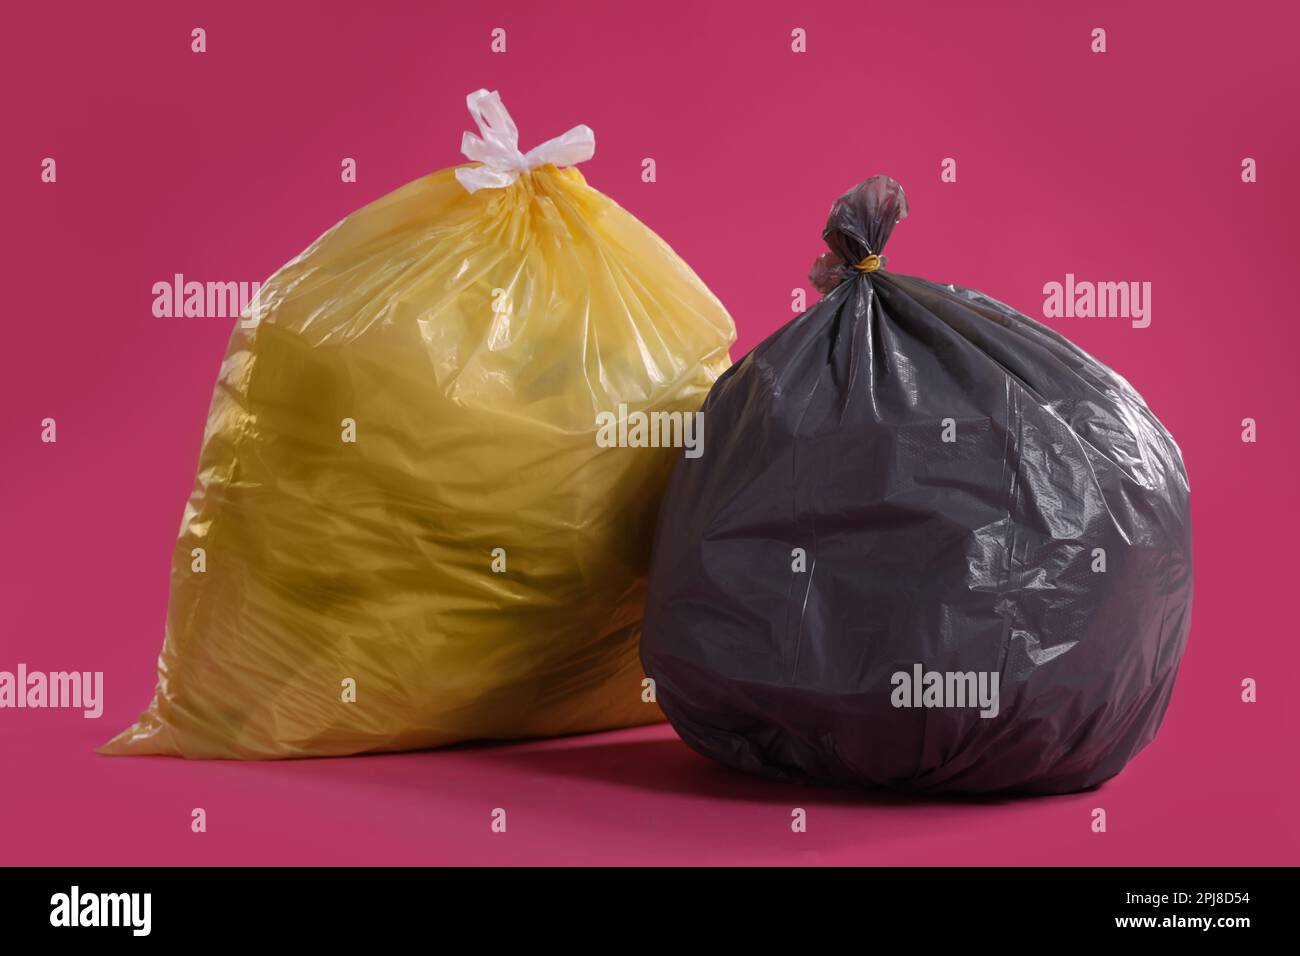 https://c8.alamy.com/comp/2PJ8D54/trash-bags-full-of-garbage-on-pink-background-2PJ8D54.jpg